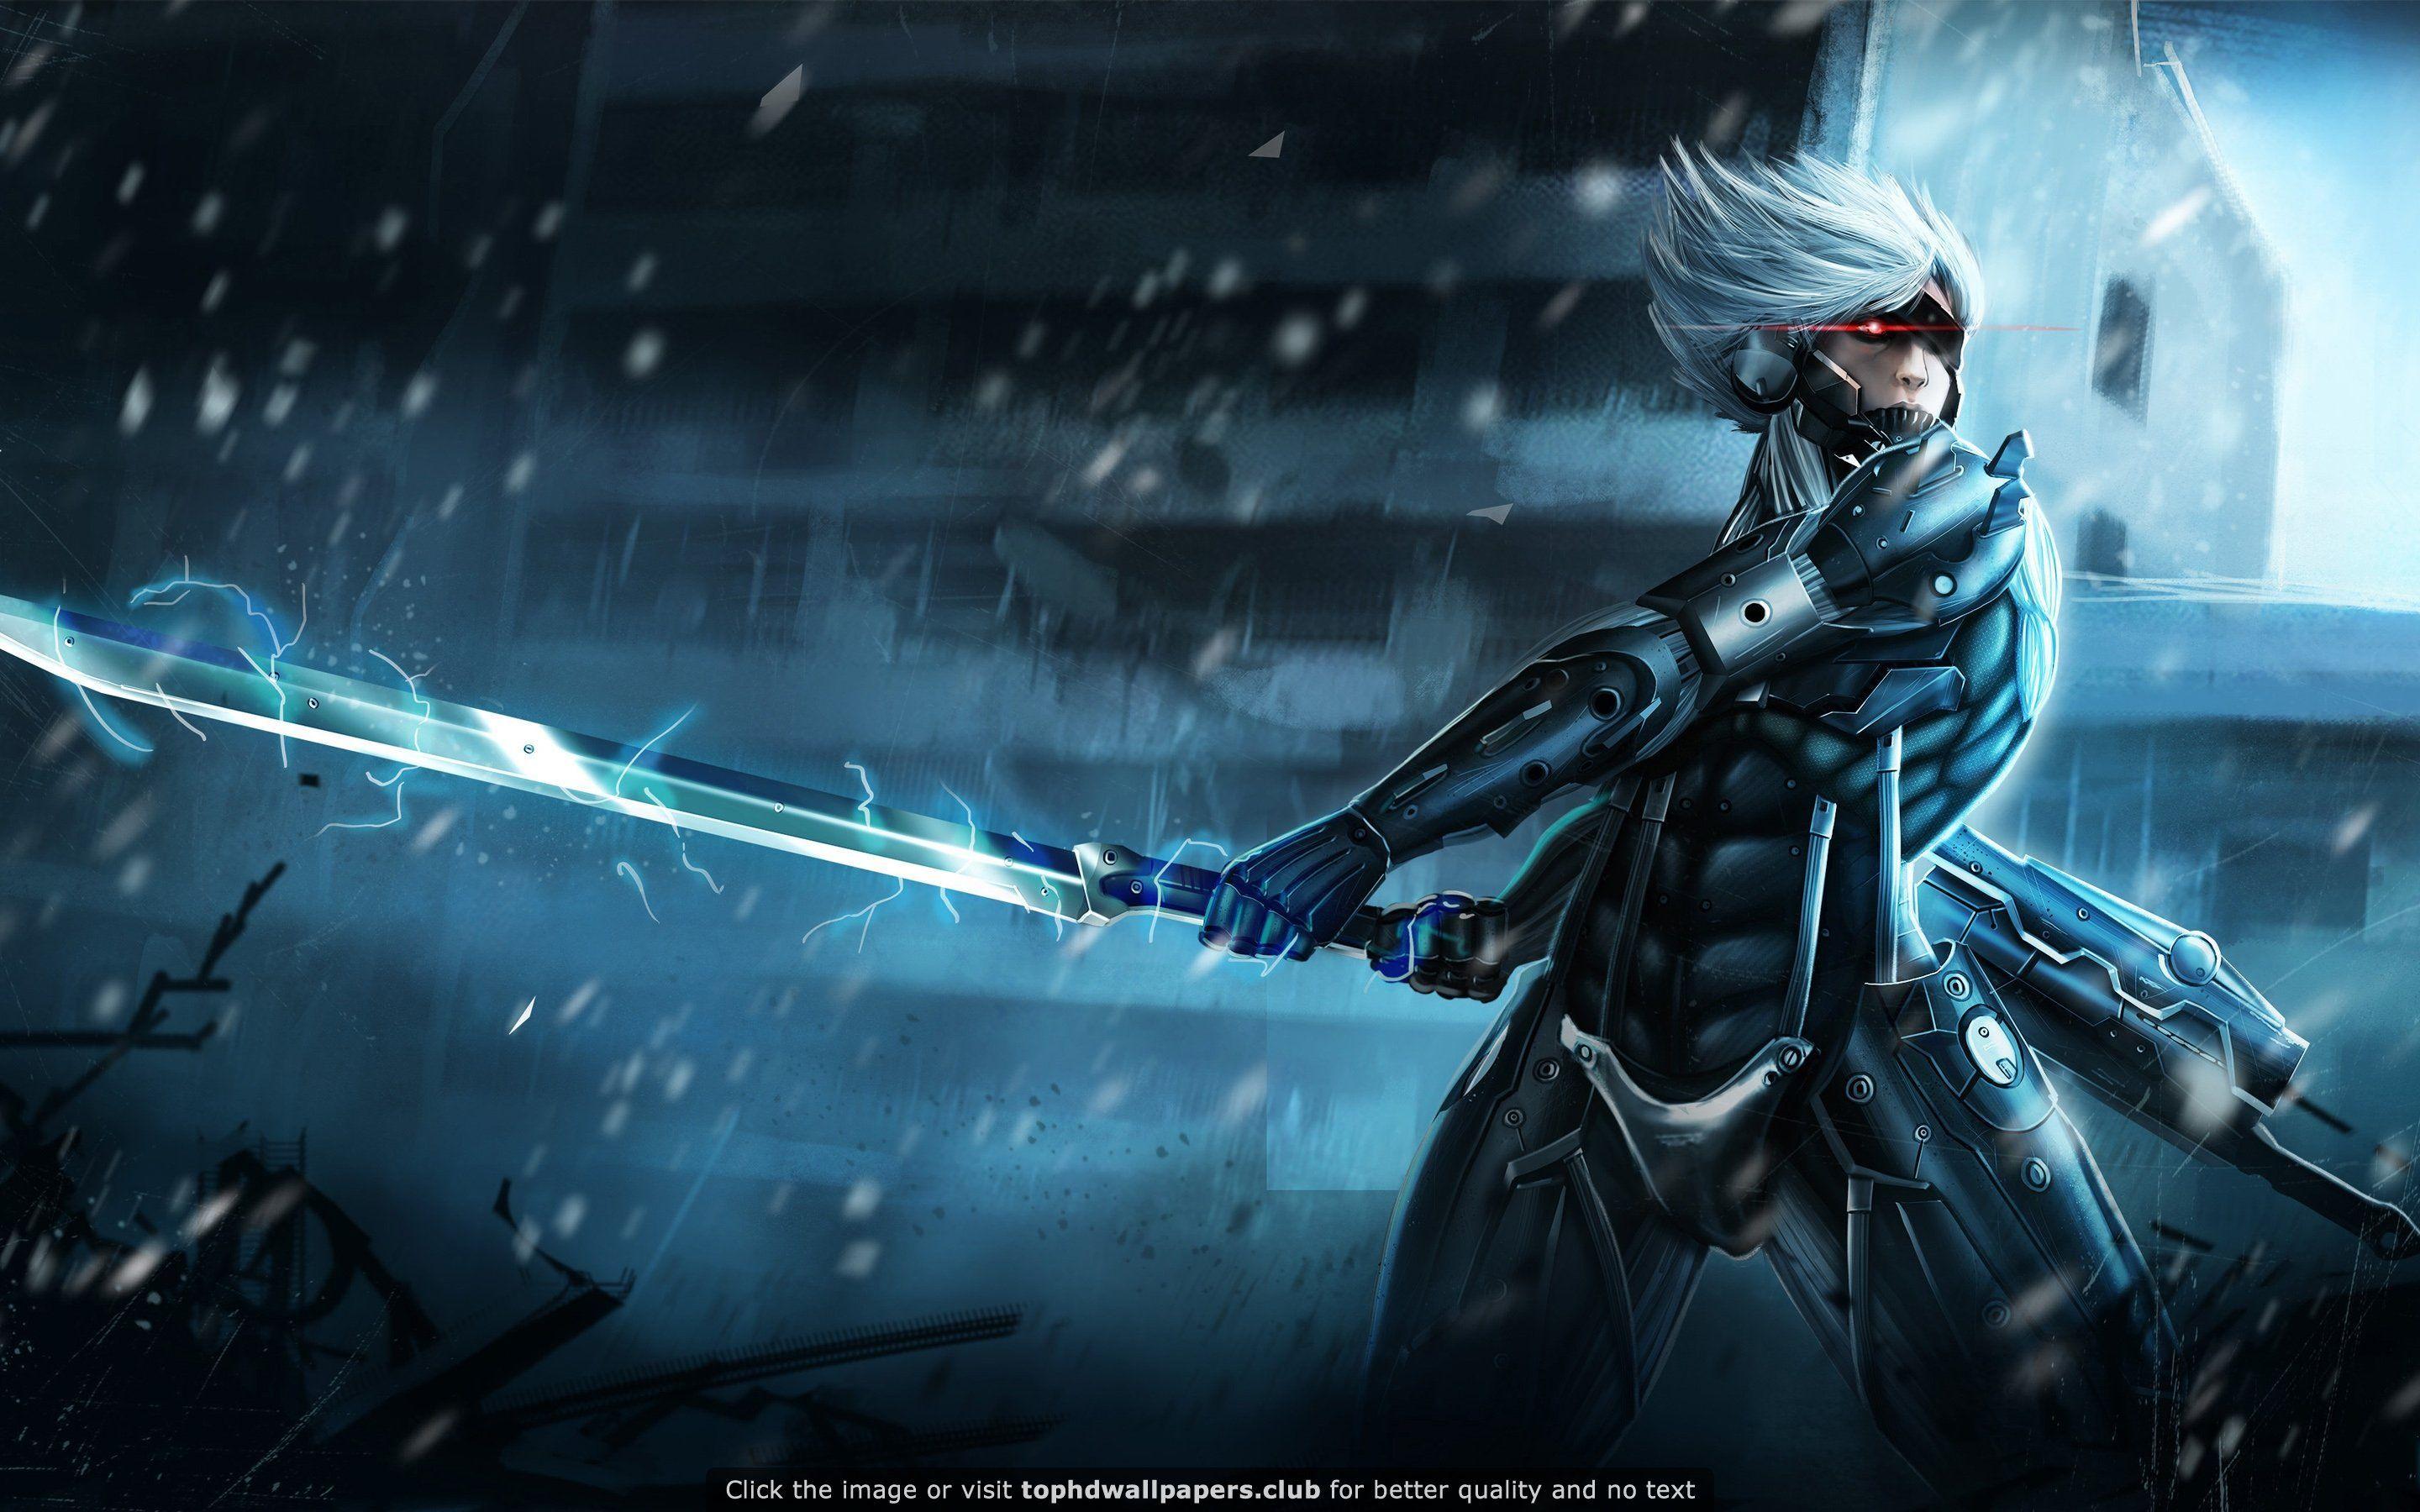 Metal Gear Rising Raiden HD wallpaper for your PC, Mac or Mobile de